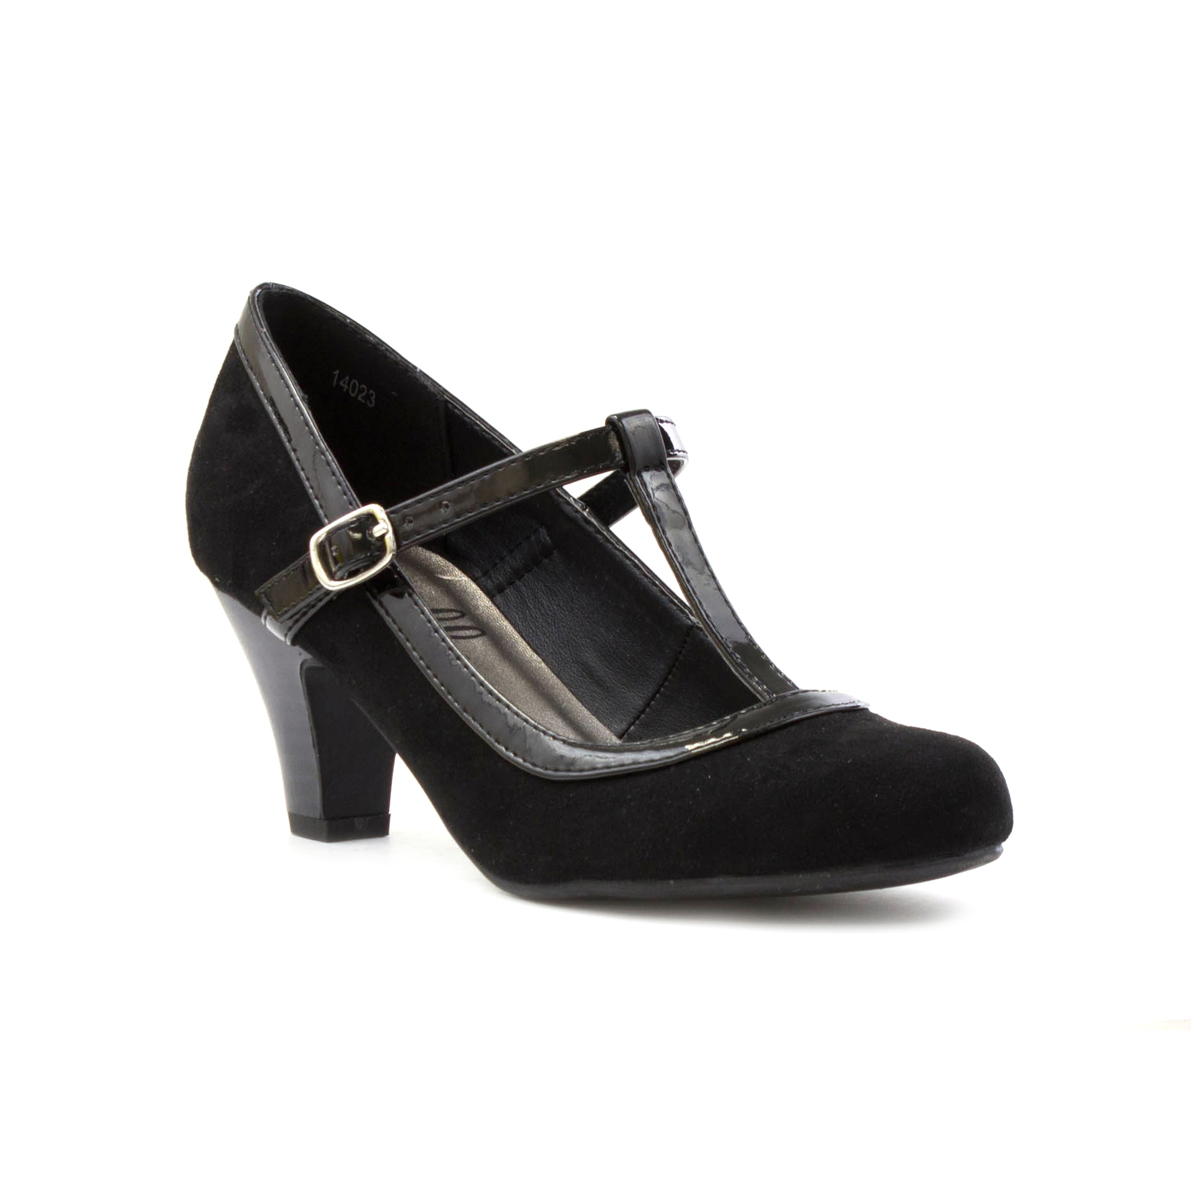 size 2 black heels uk